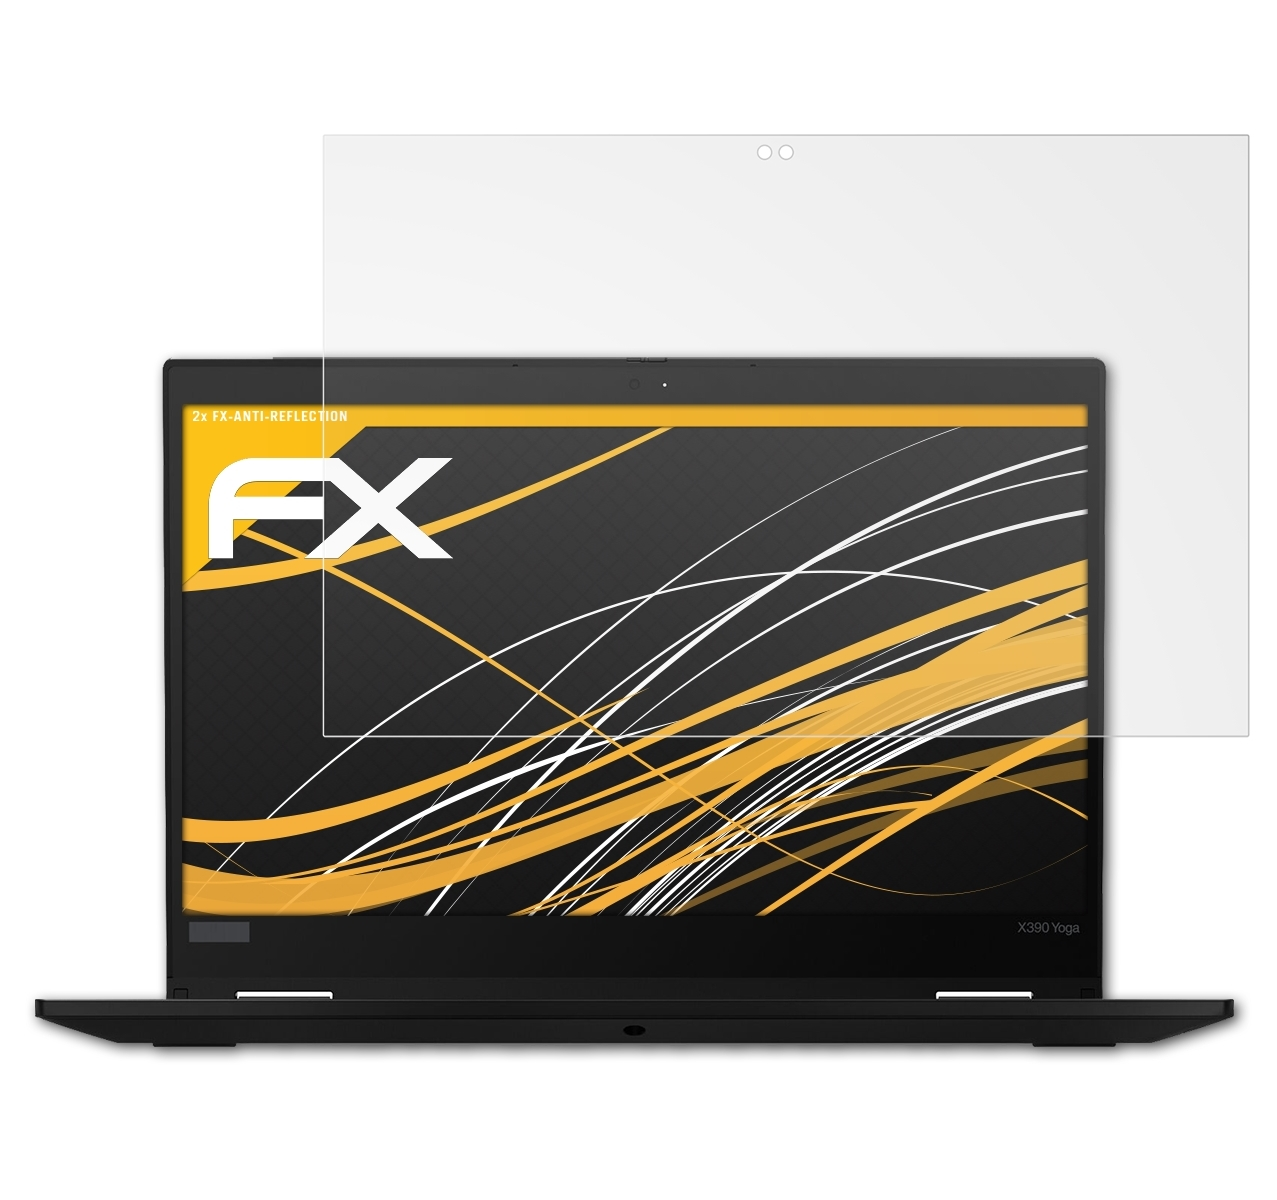 ATFOLIX 2x FX-Antireflex Displayschutz(für Lenovo ThinkPad Yoga) X390